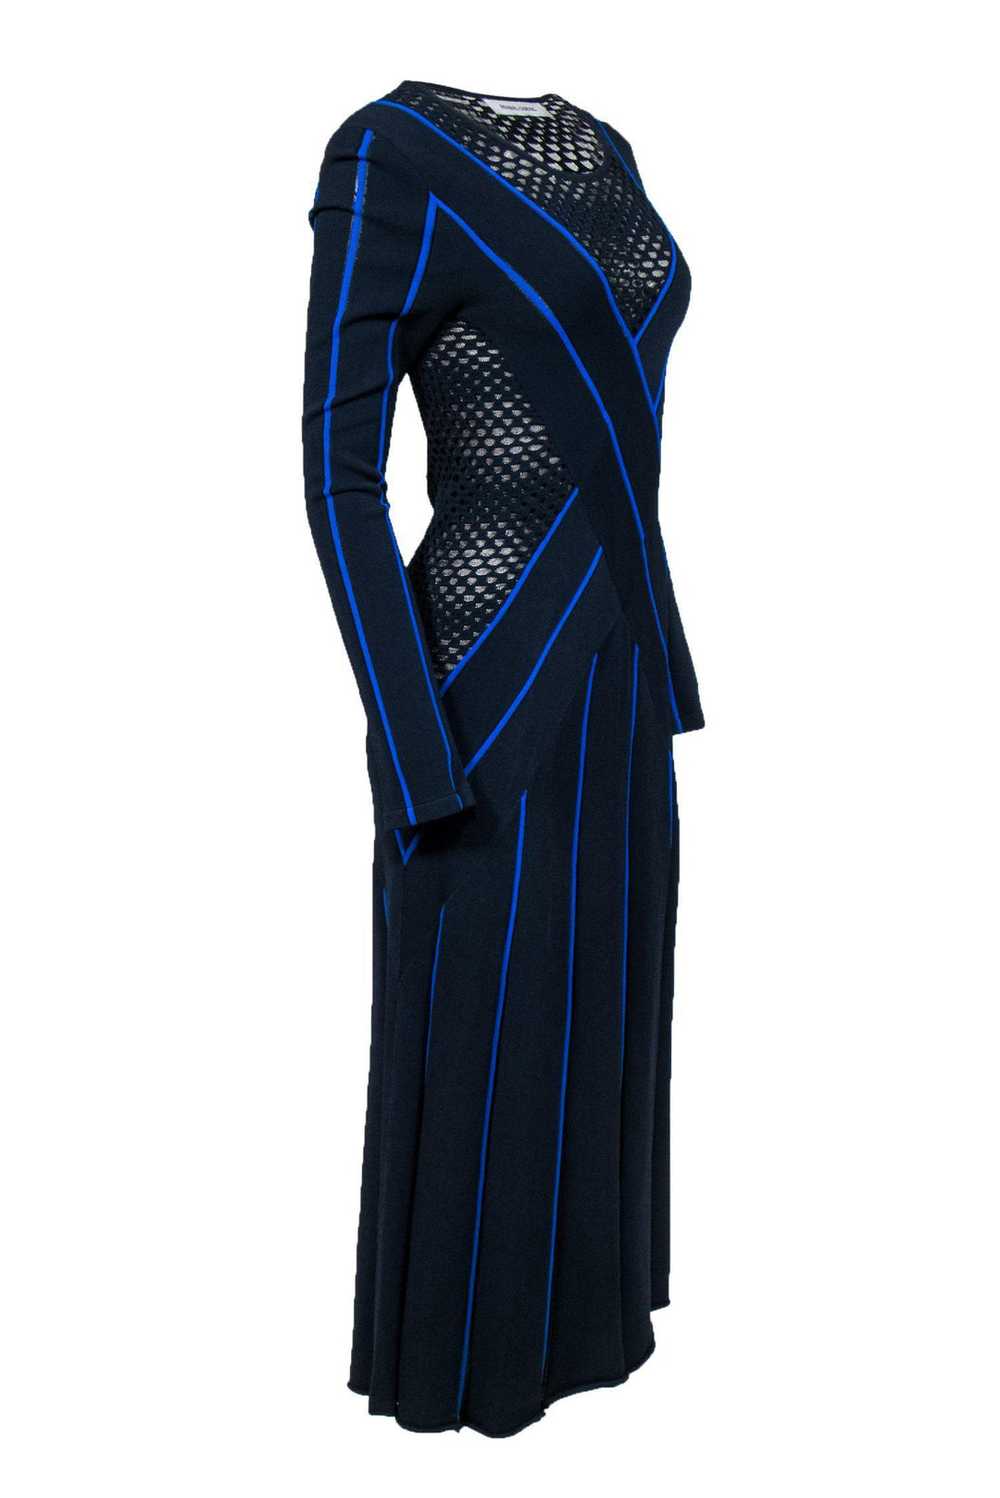 Prabal Gurung - Blue Knit Maxi Dress w/ Netted Ac… - image 2